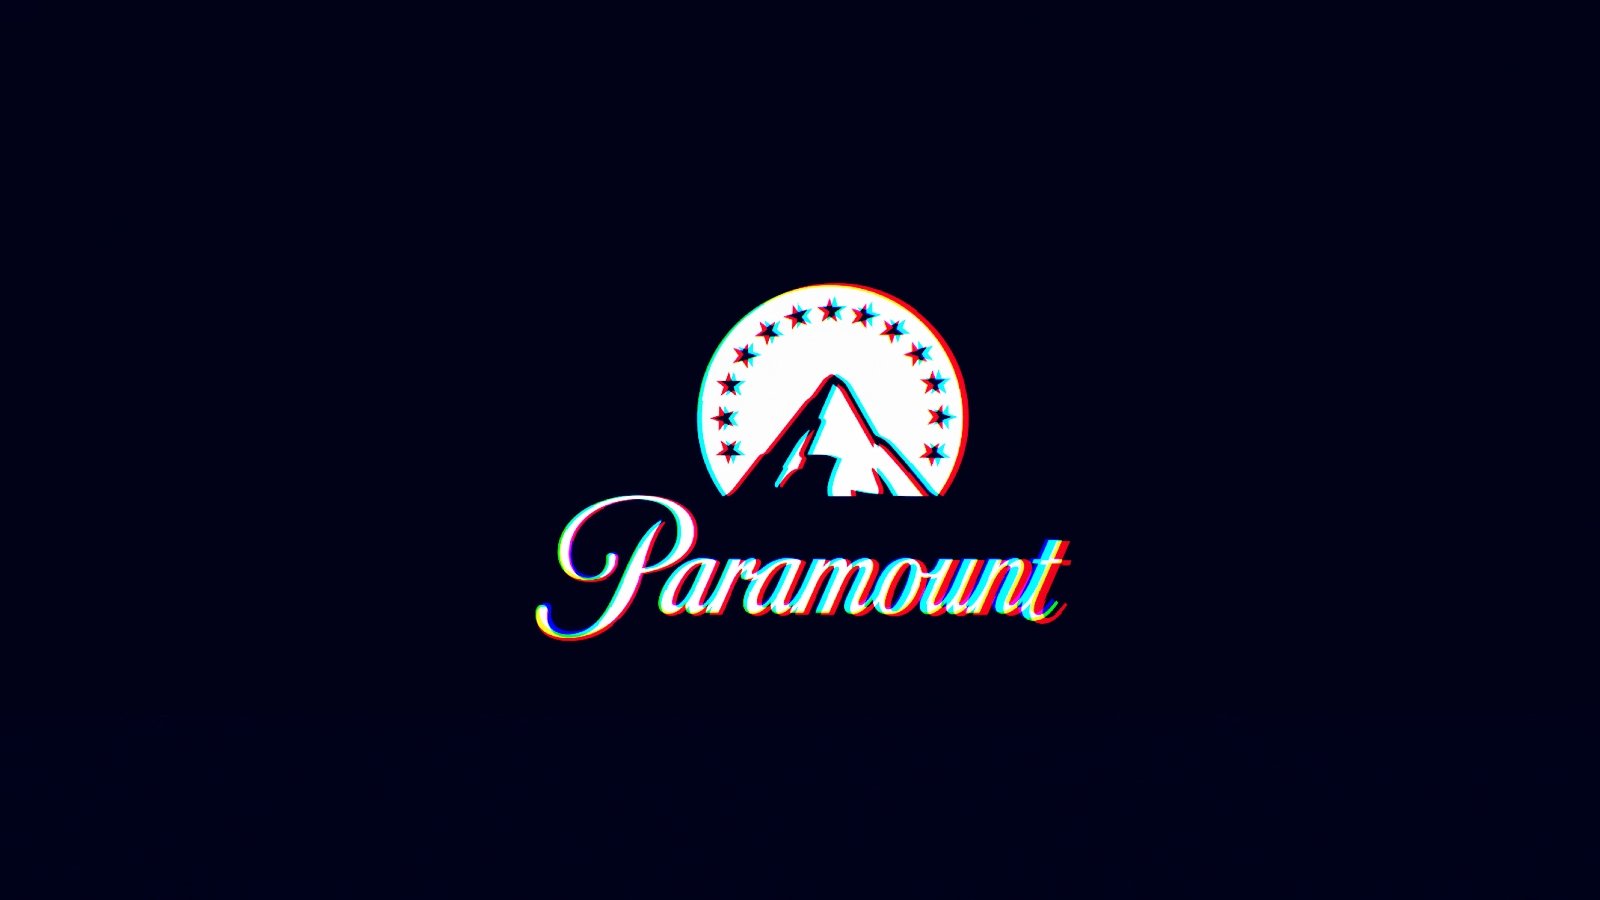 Paramount Global disclosed a data breach